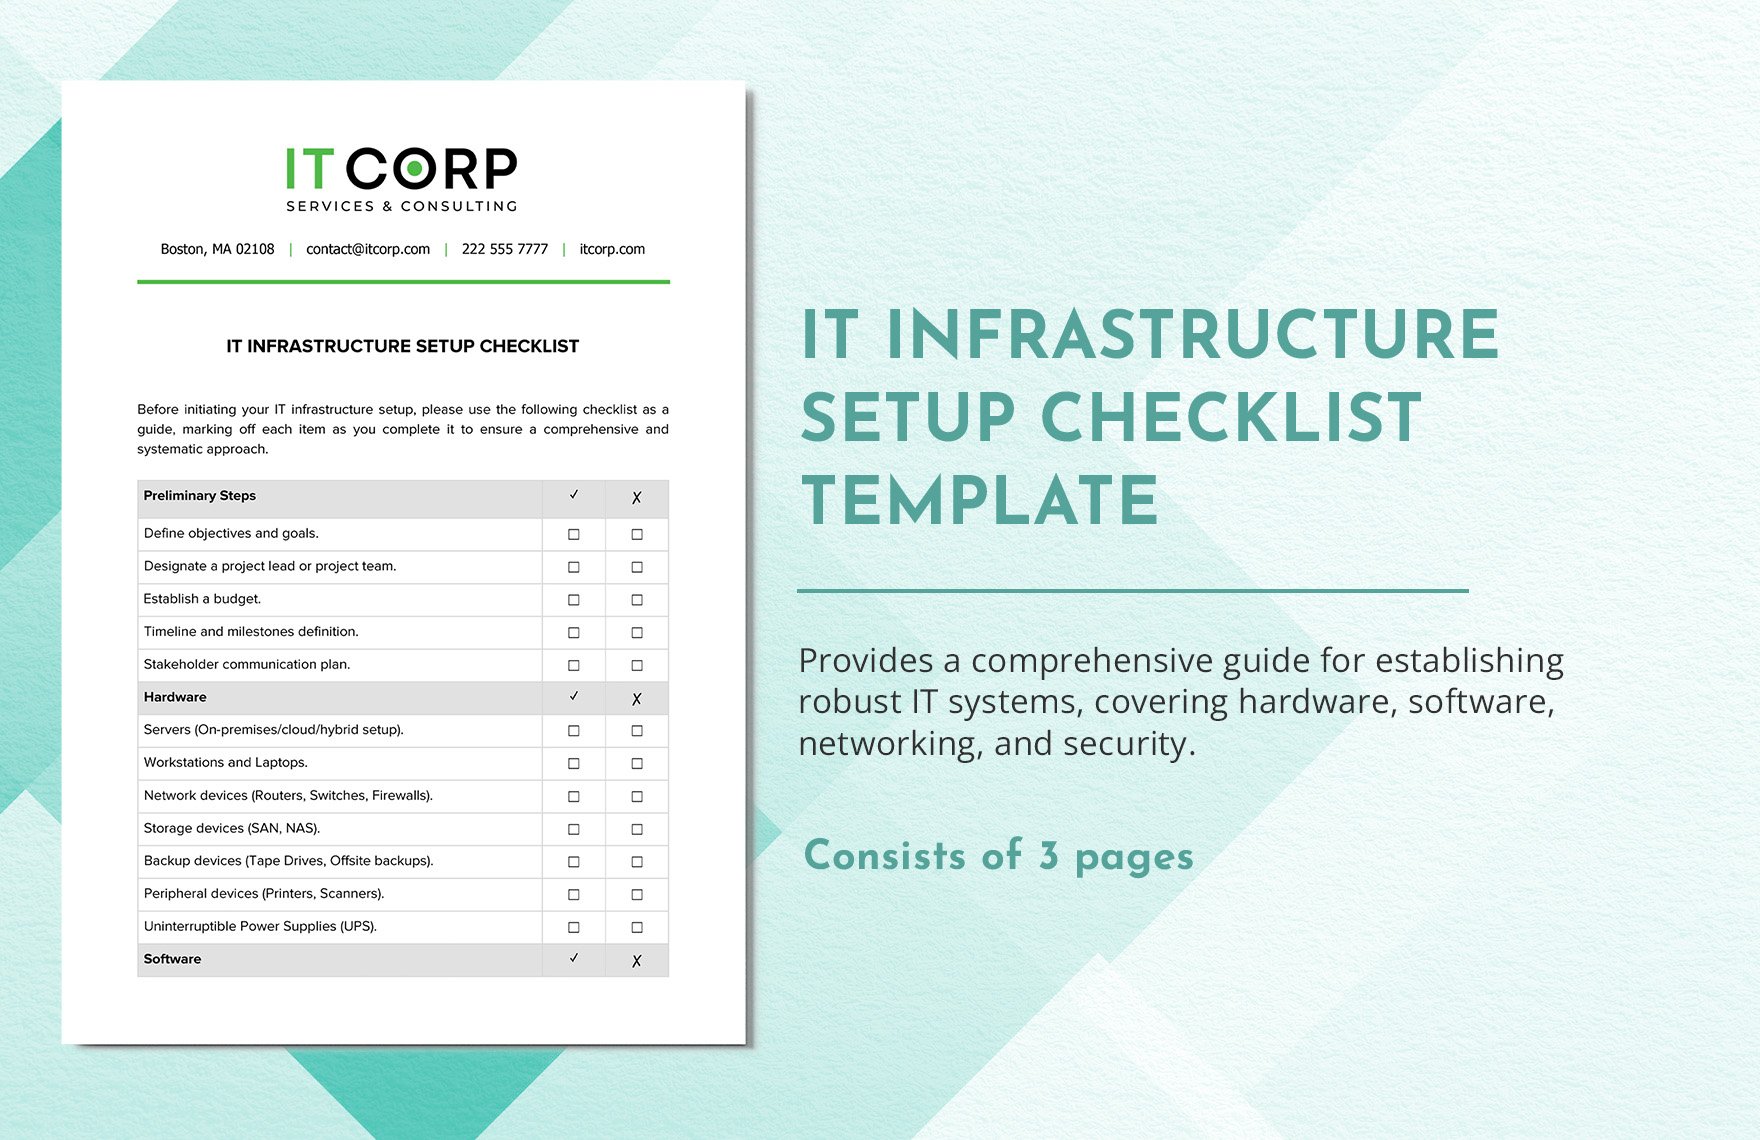 IT Infrastructure Setup Checklist Template